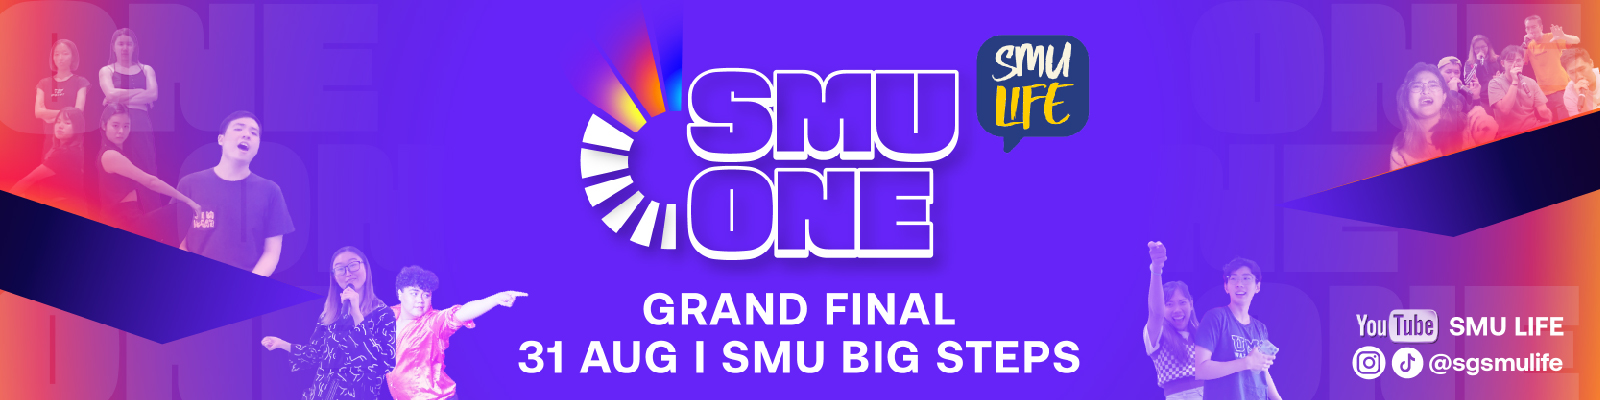 SMU One banner image